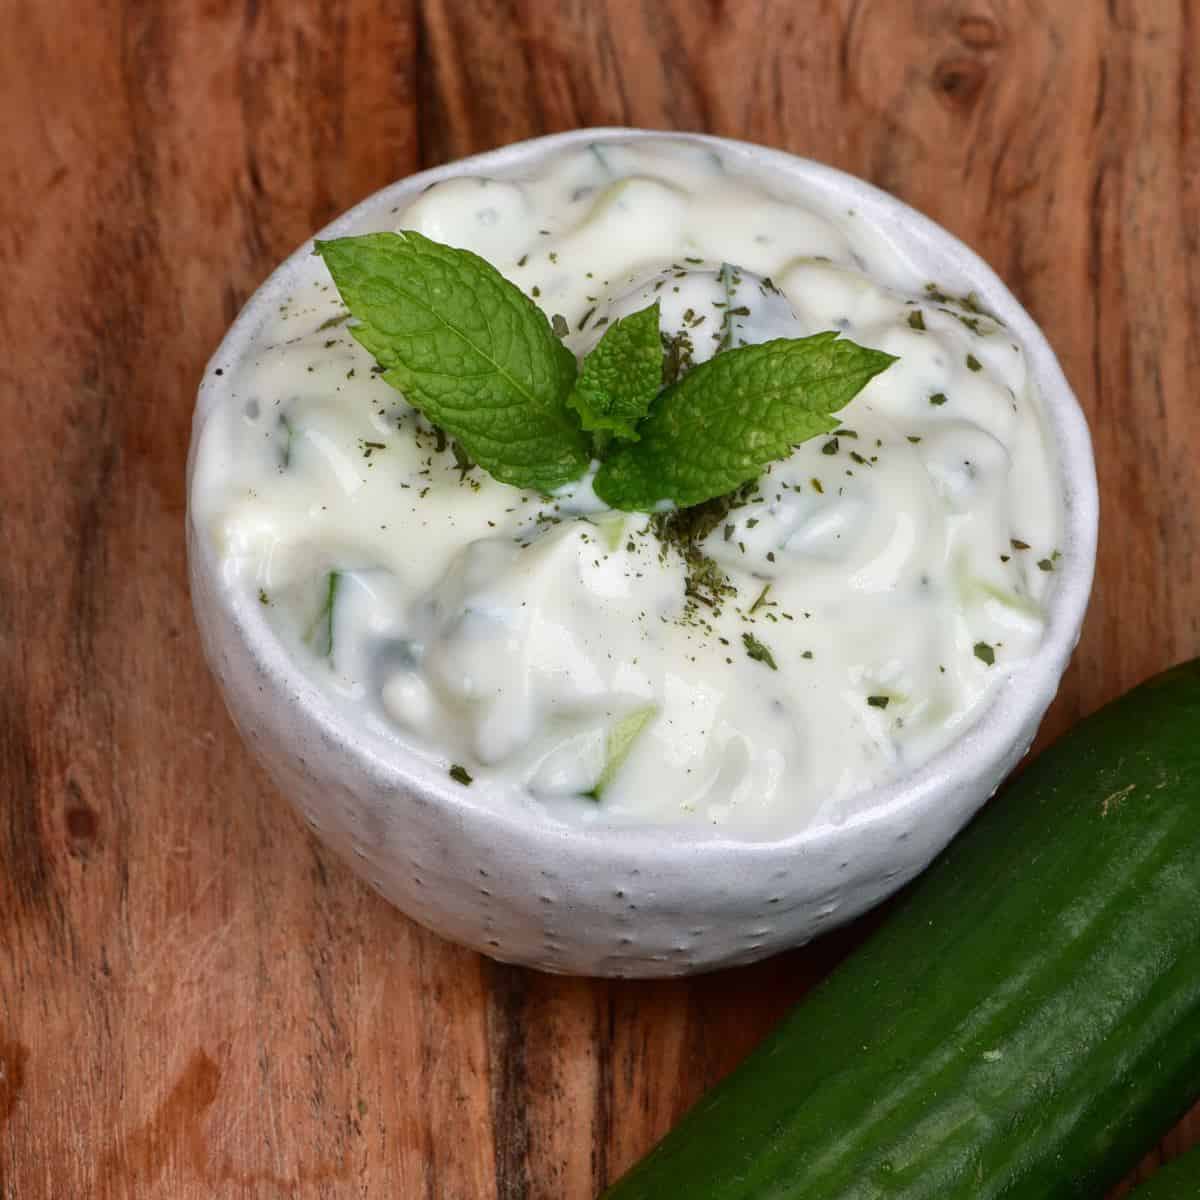 Lebanese Creamy Cucumber Yogurt Salad (Kh’yar bi laban)